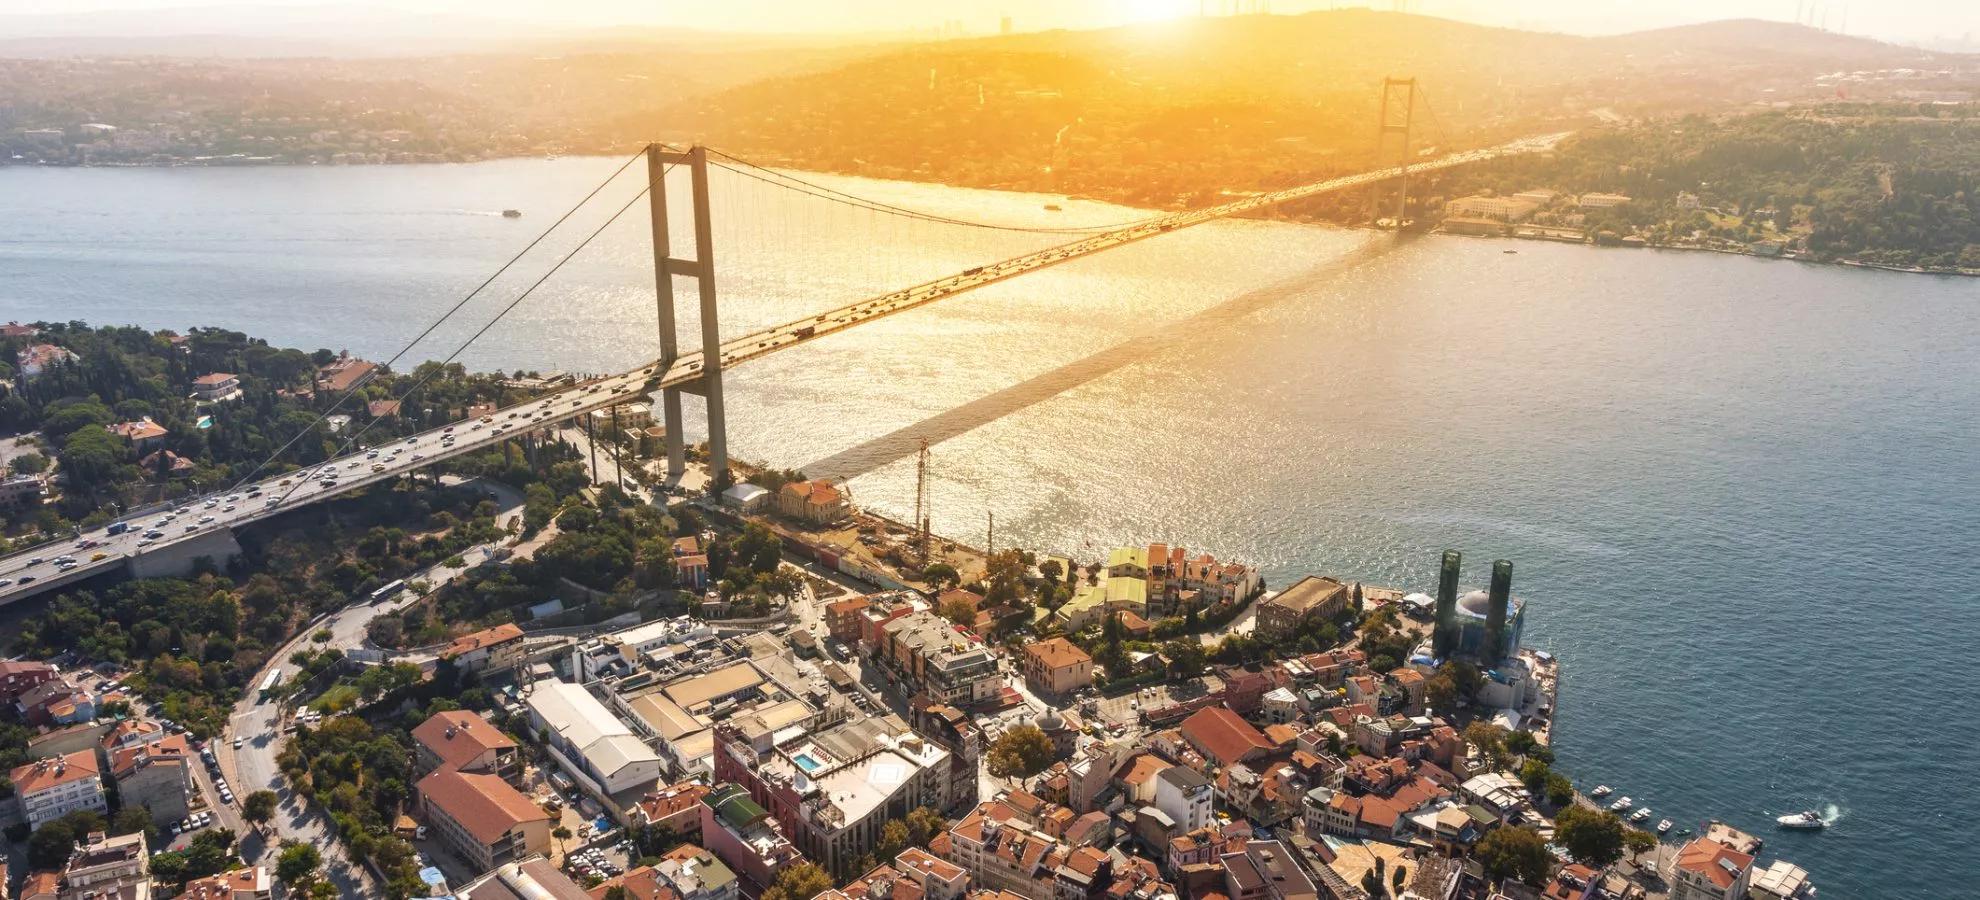 Bosporus bridge, Istanbul, Turkey